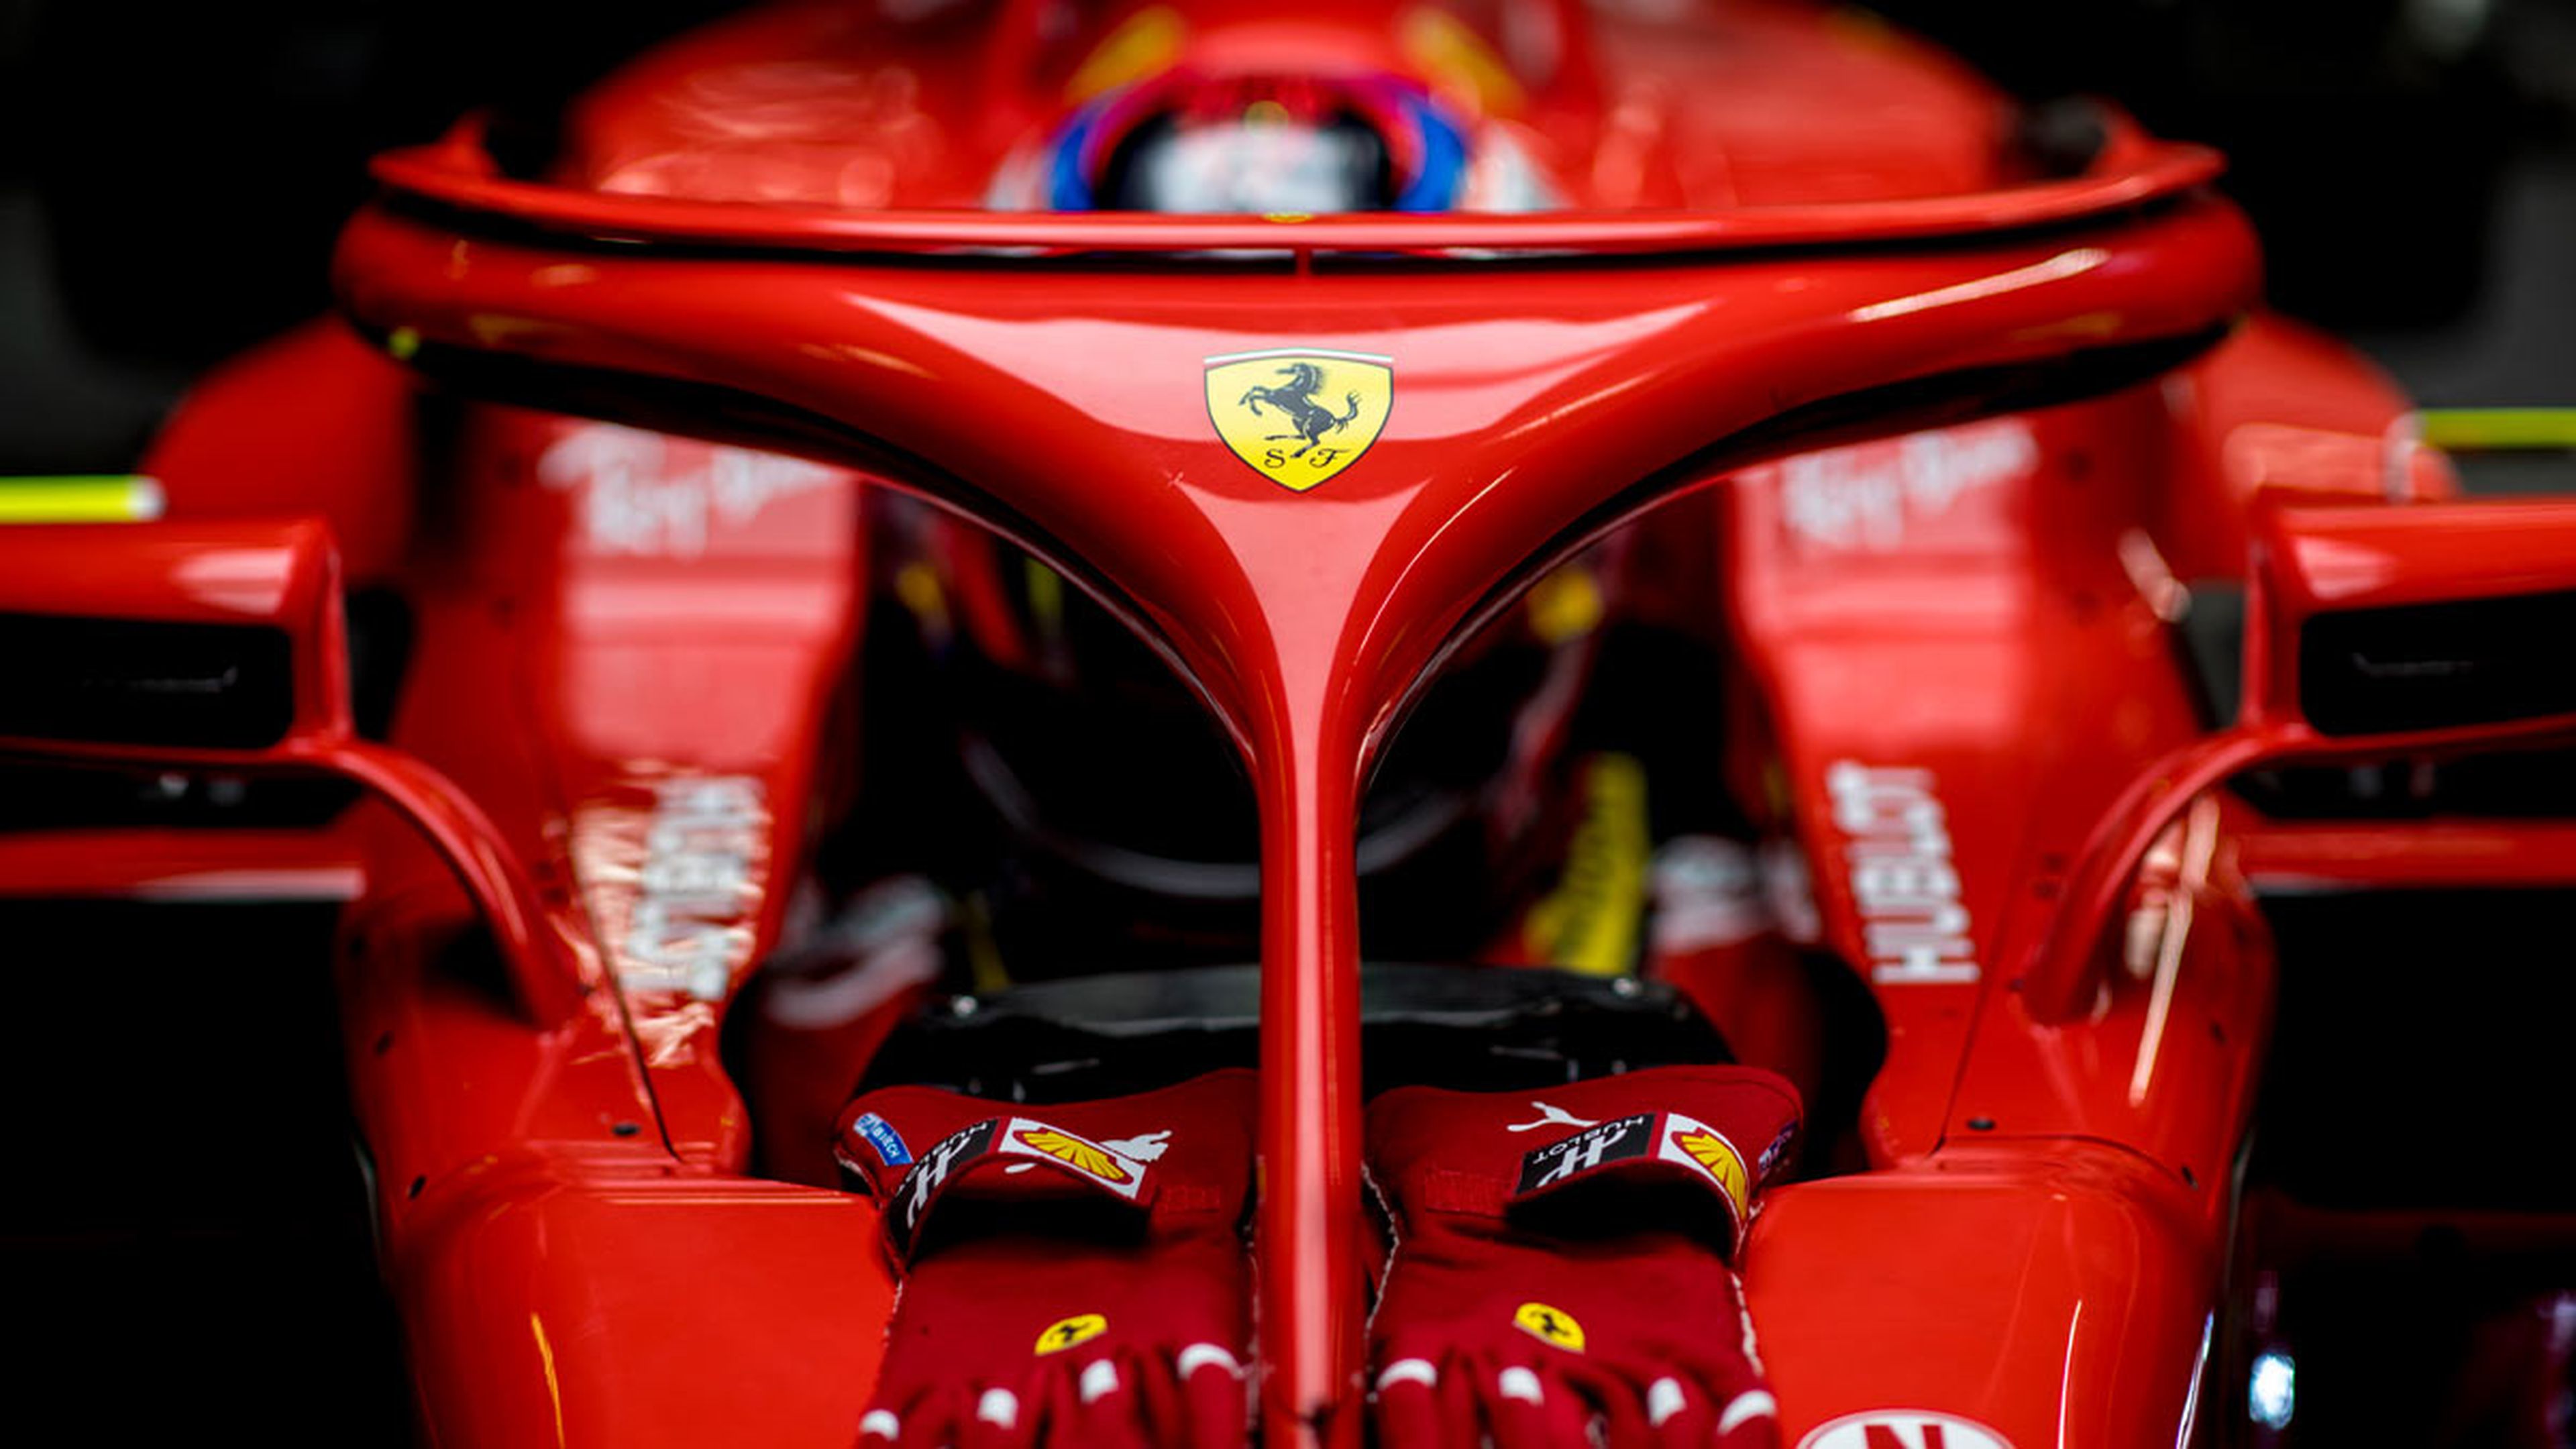 El Halo en el Ferrari de Fórmula 1 de Kimi Raikkonen